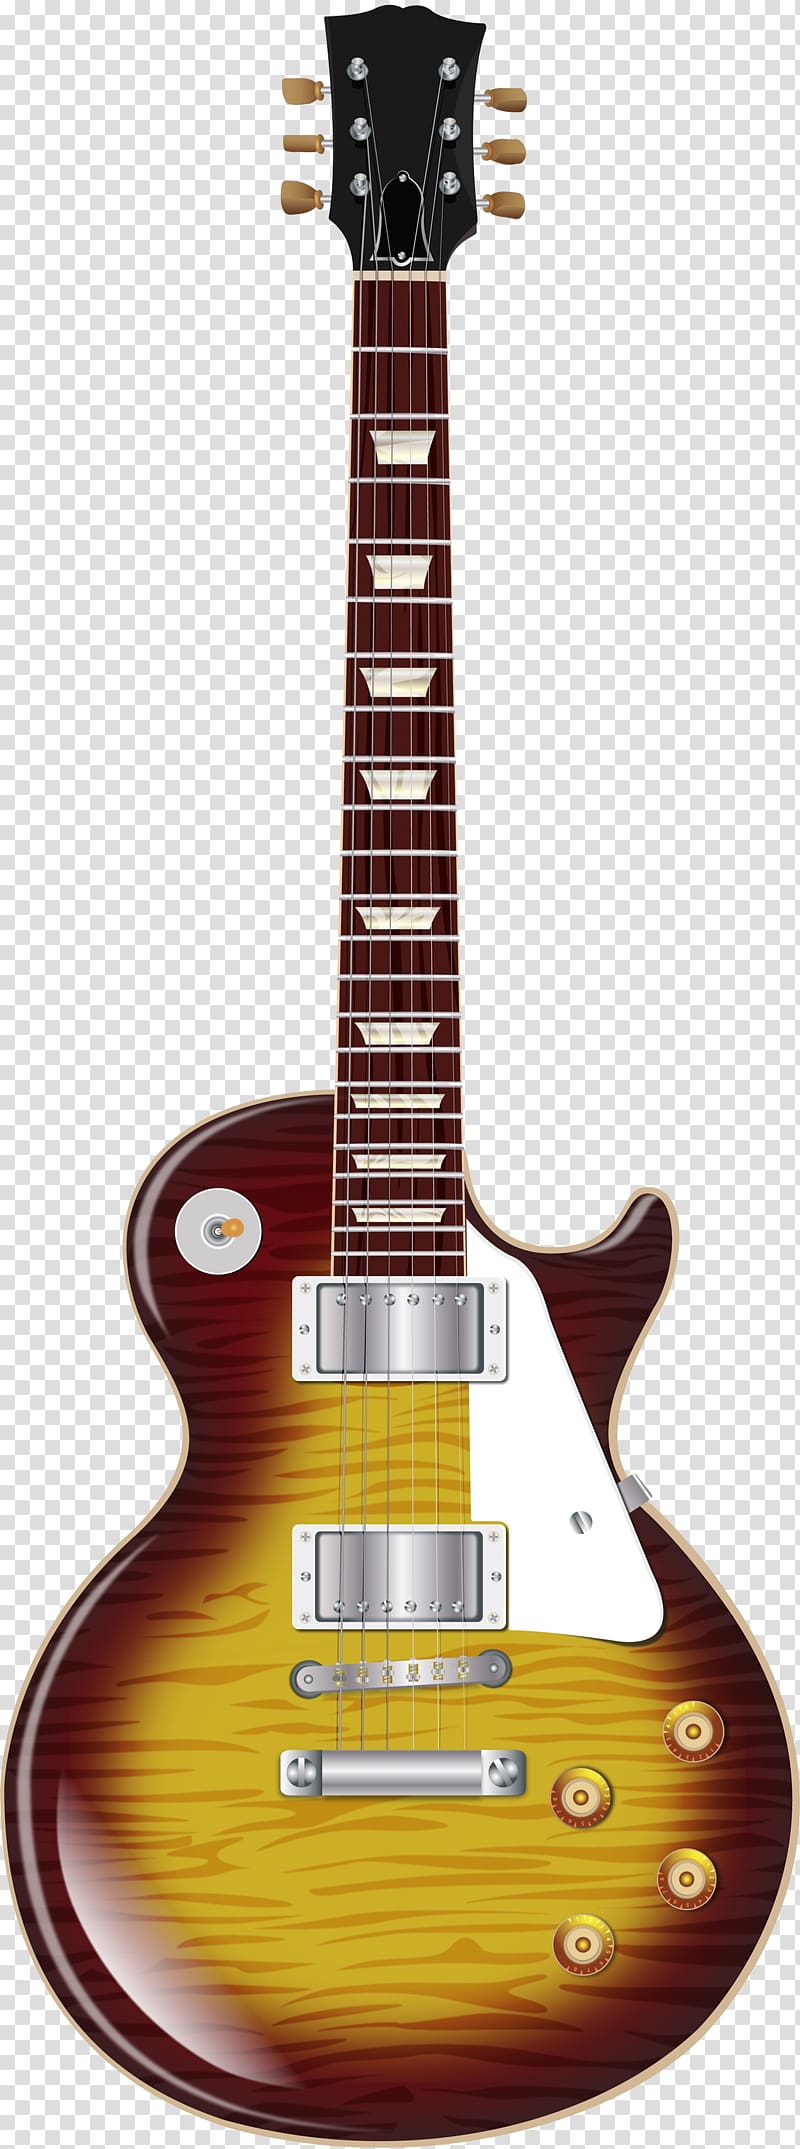 Gibson Les Paul Custom Epiphone Les Paul Standard PlusTop Pro Guitar, guitar transparent background PNG clipart